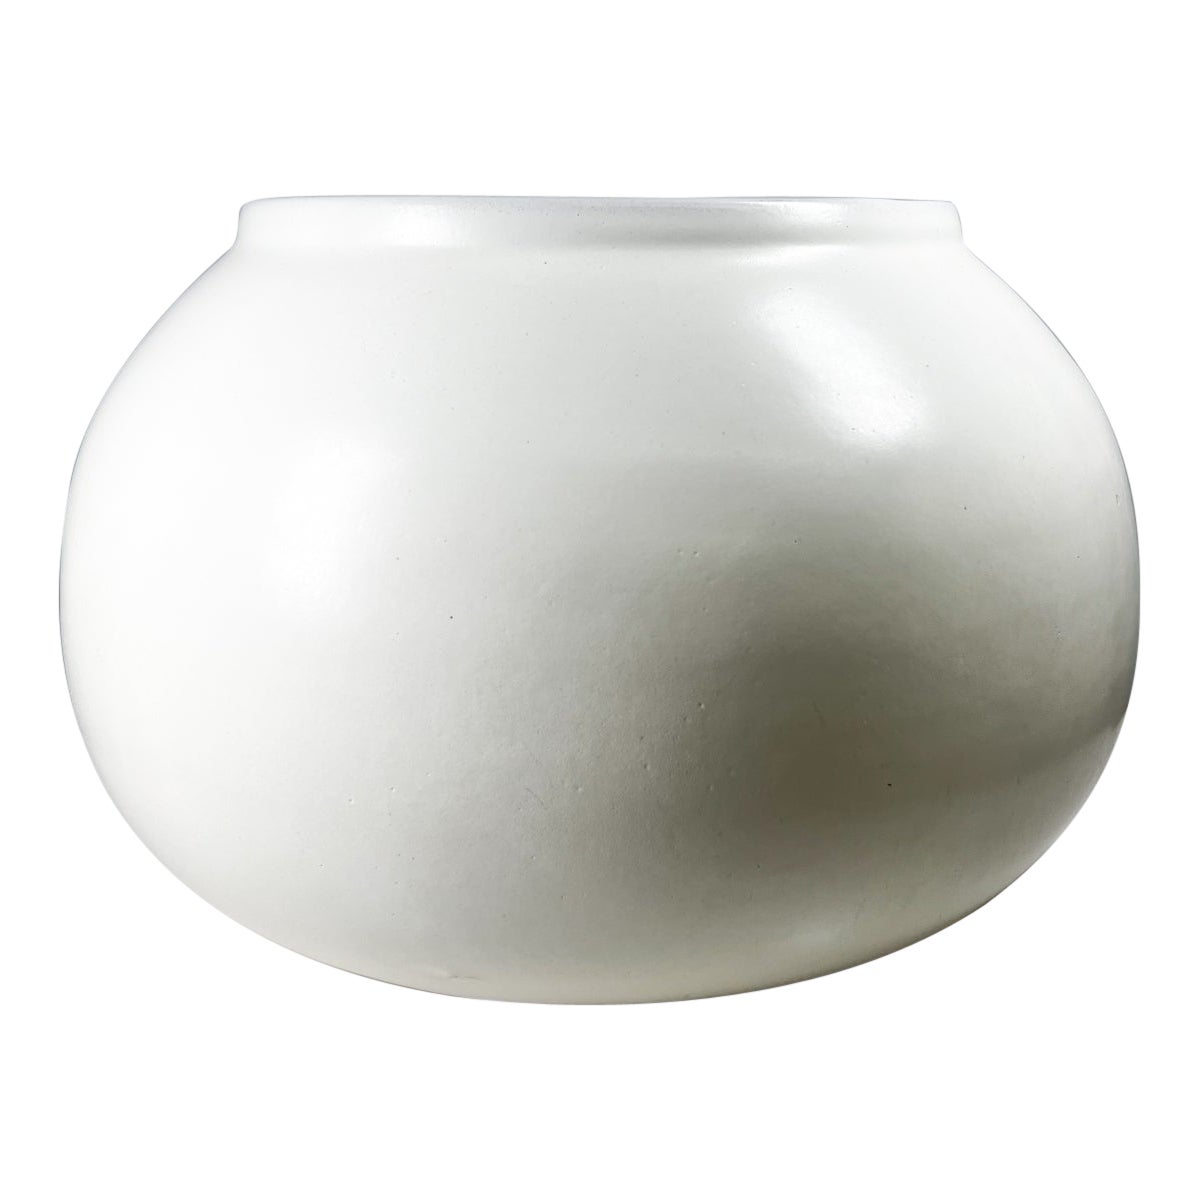 1970s Modernist White Sphere Planter Architectural Art Pottery  In Good Condition For Sale In Chula Vista, CA